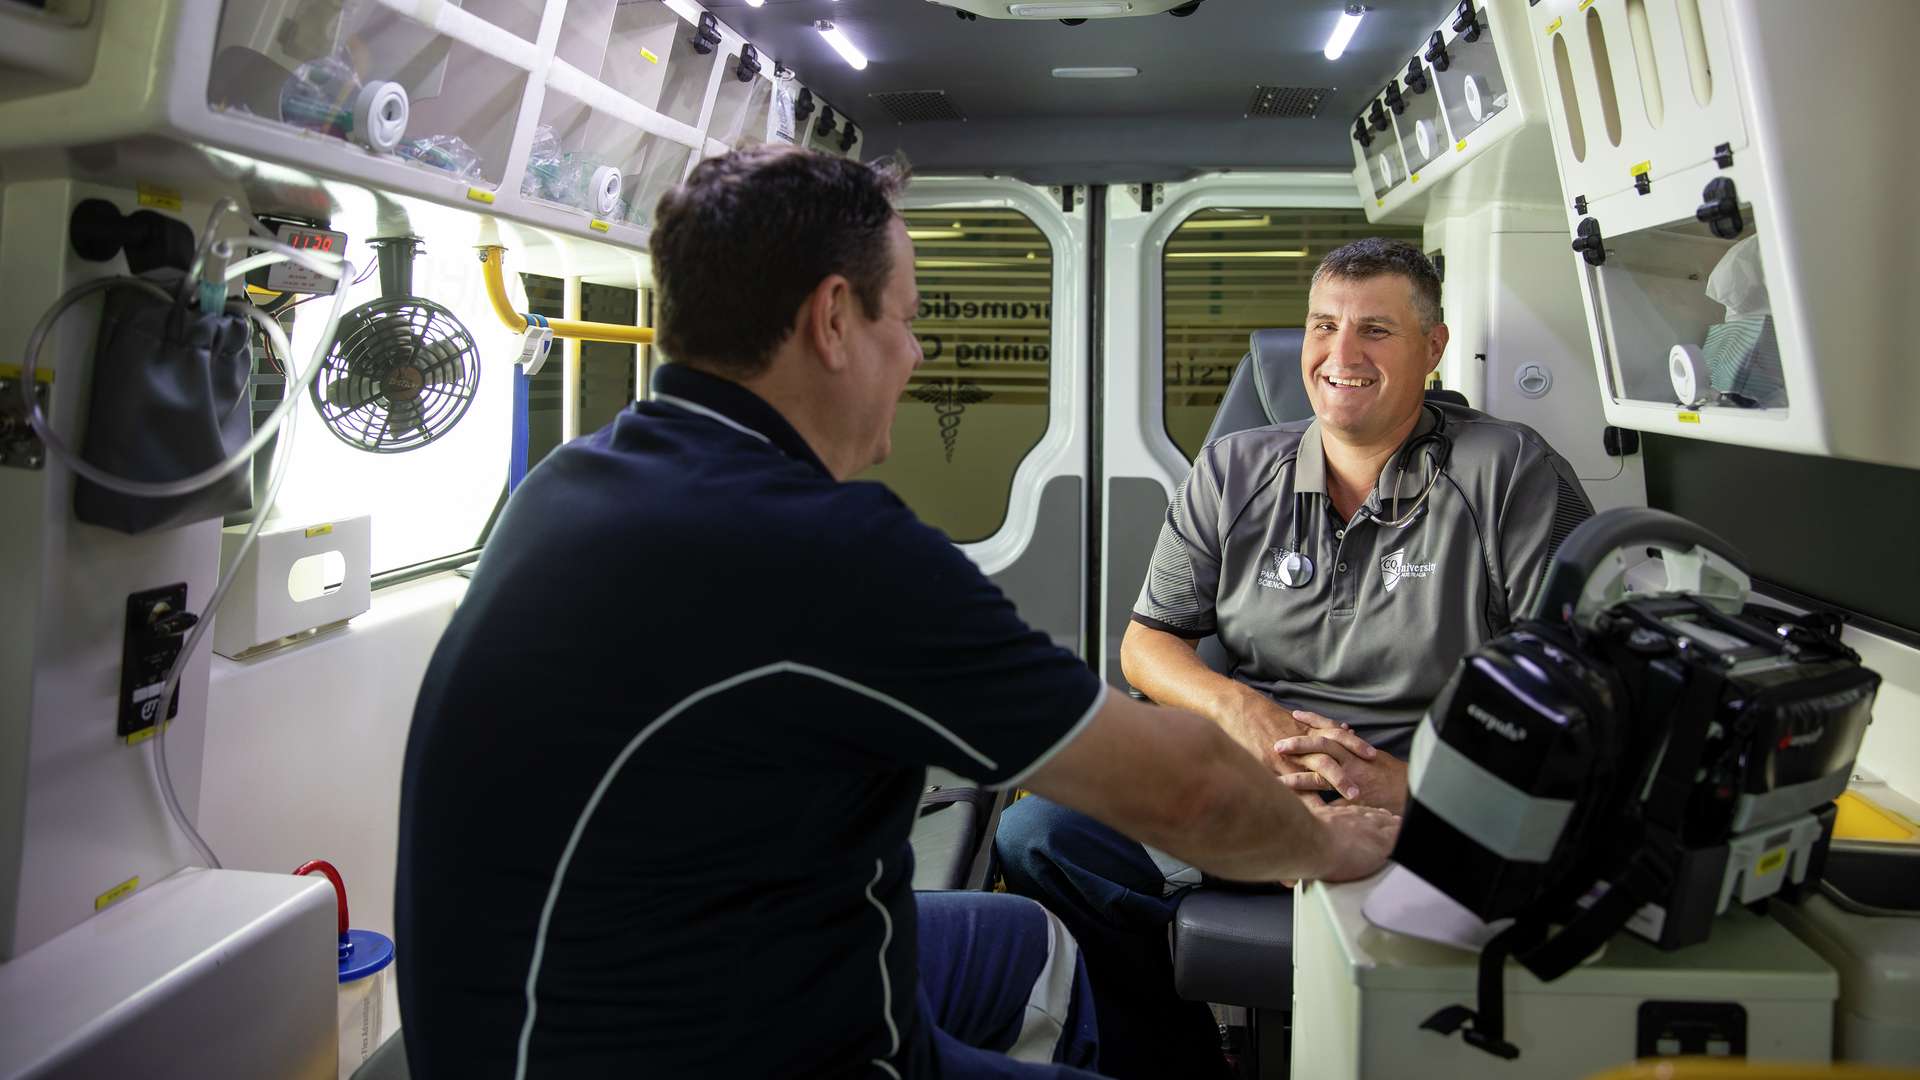 A paramedic student with their teacher inside an ambulance